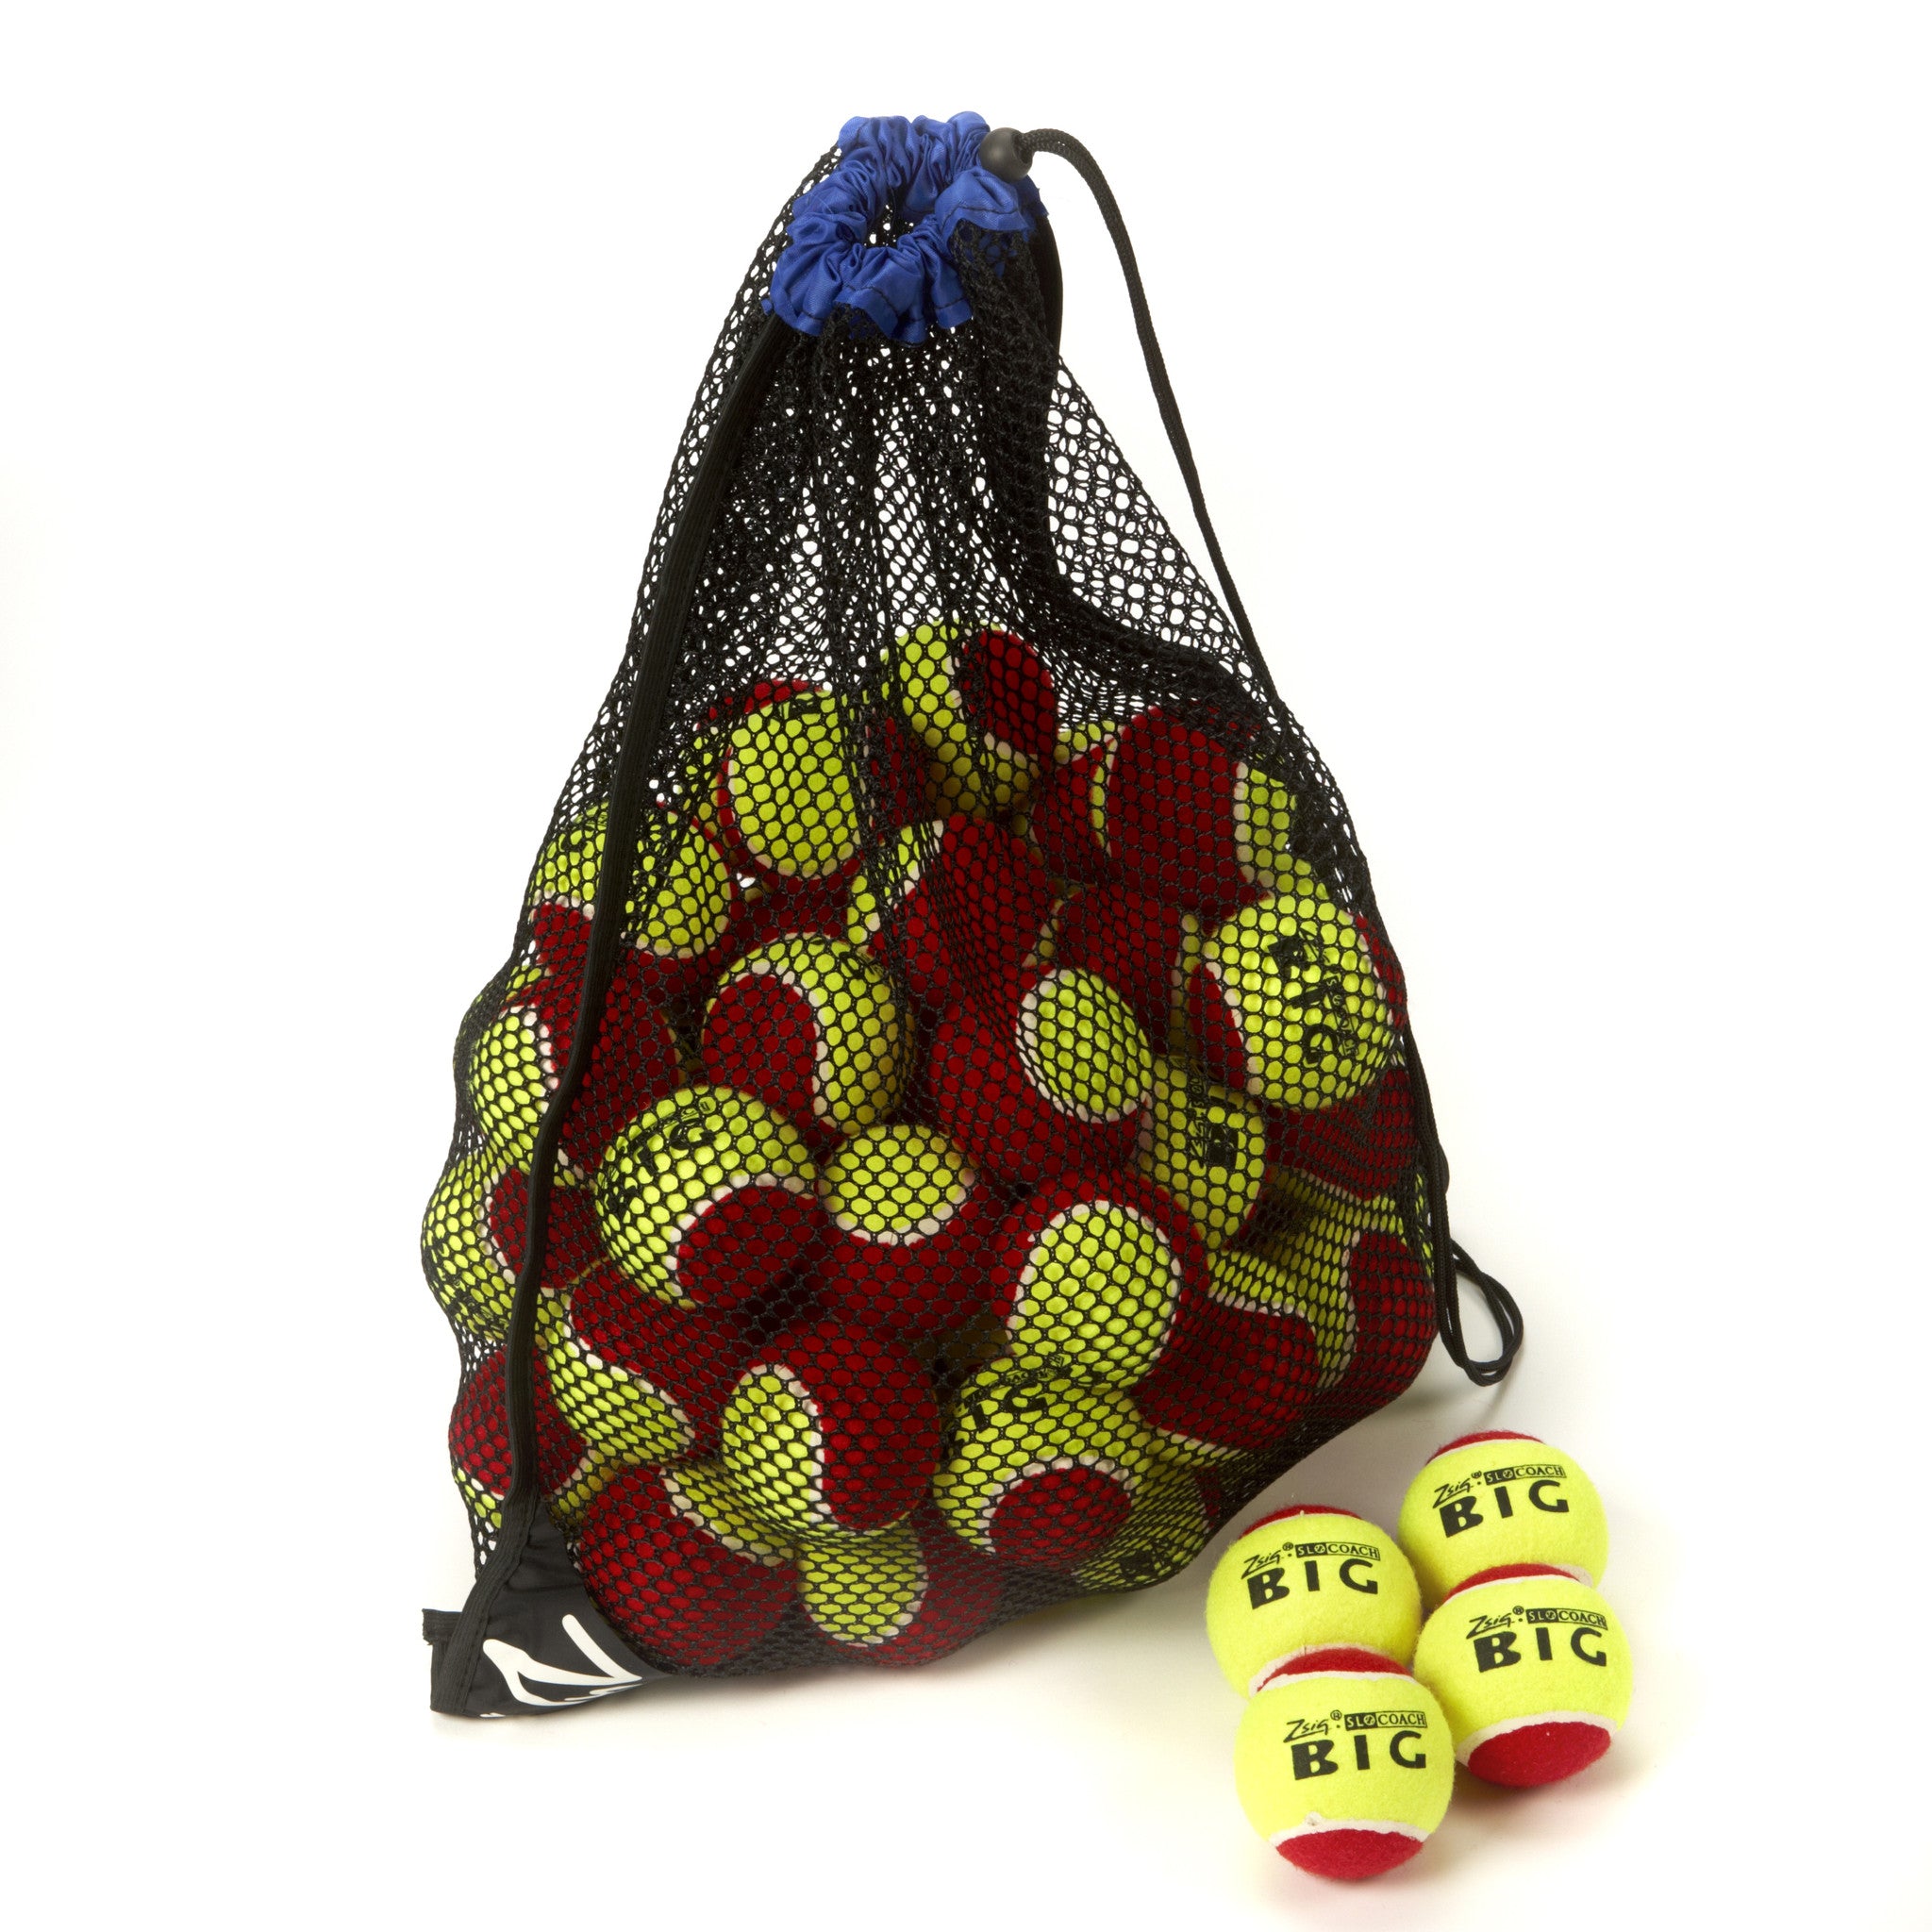 Zsig Slocoach Big Red Mini Tennis Ball Drawstring Net Bag with 5 dozen balls